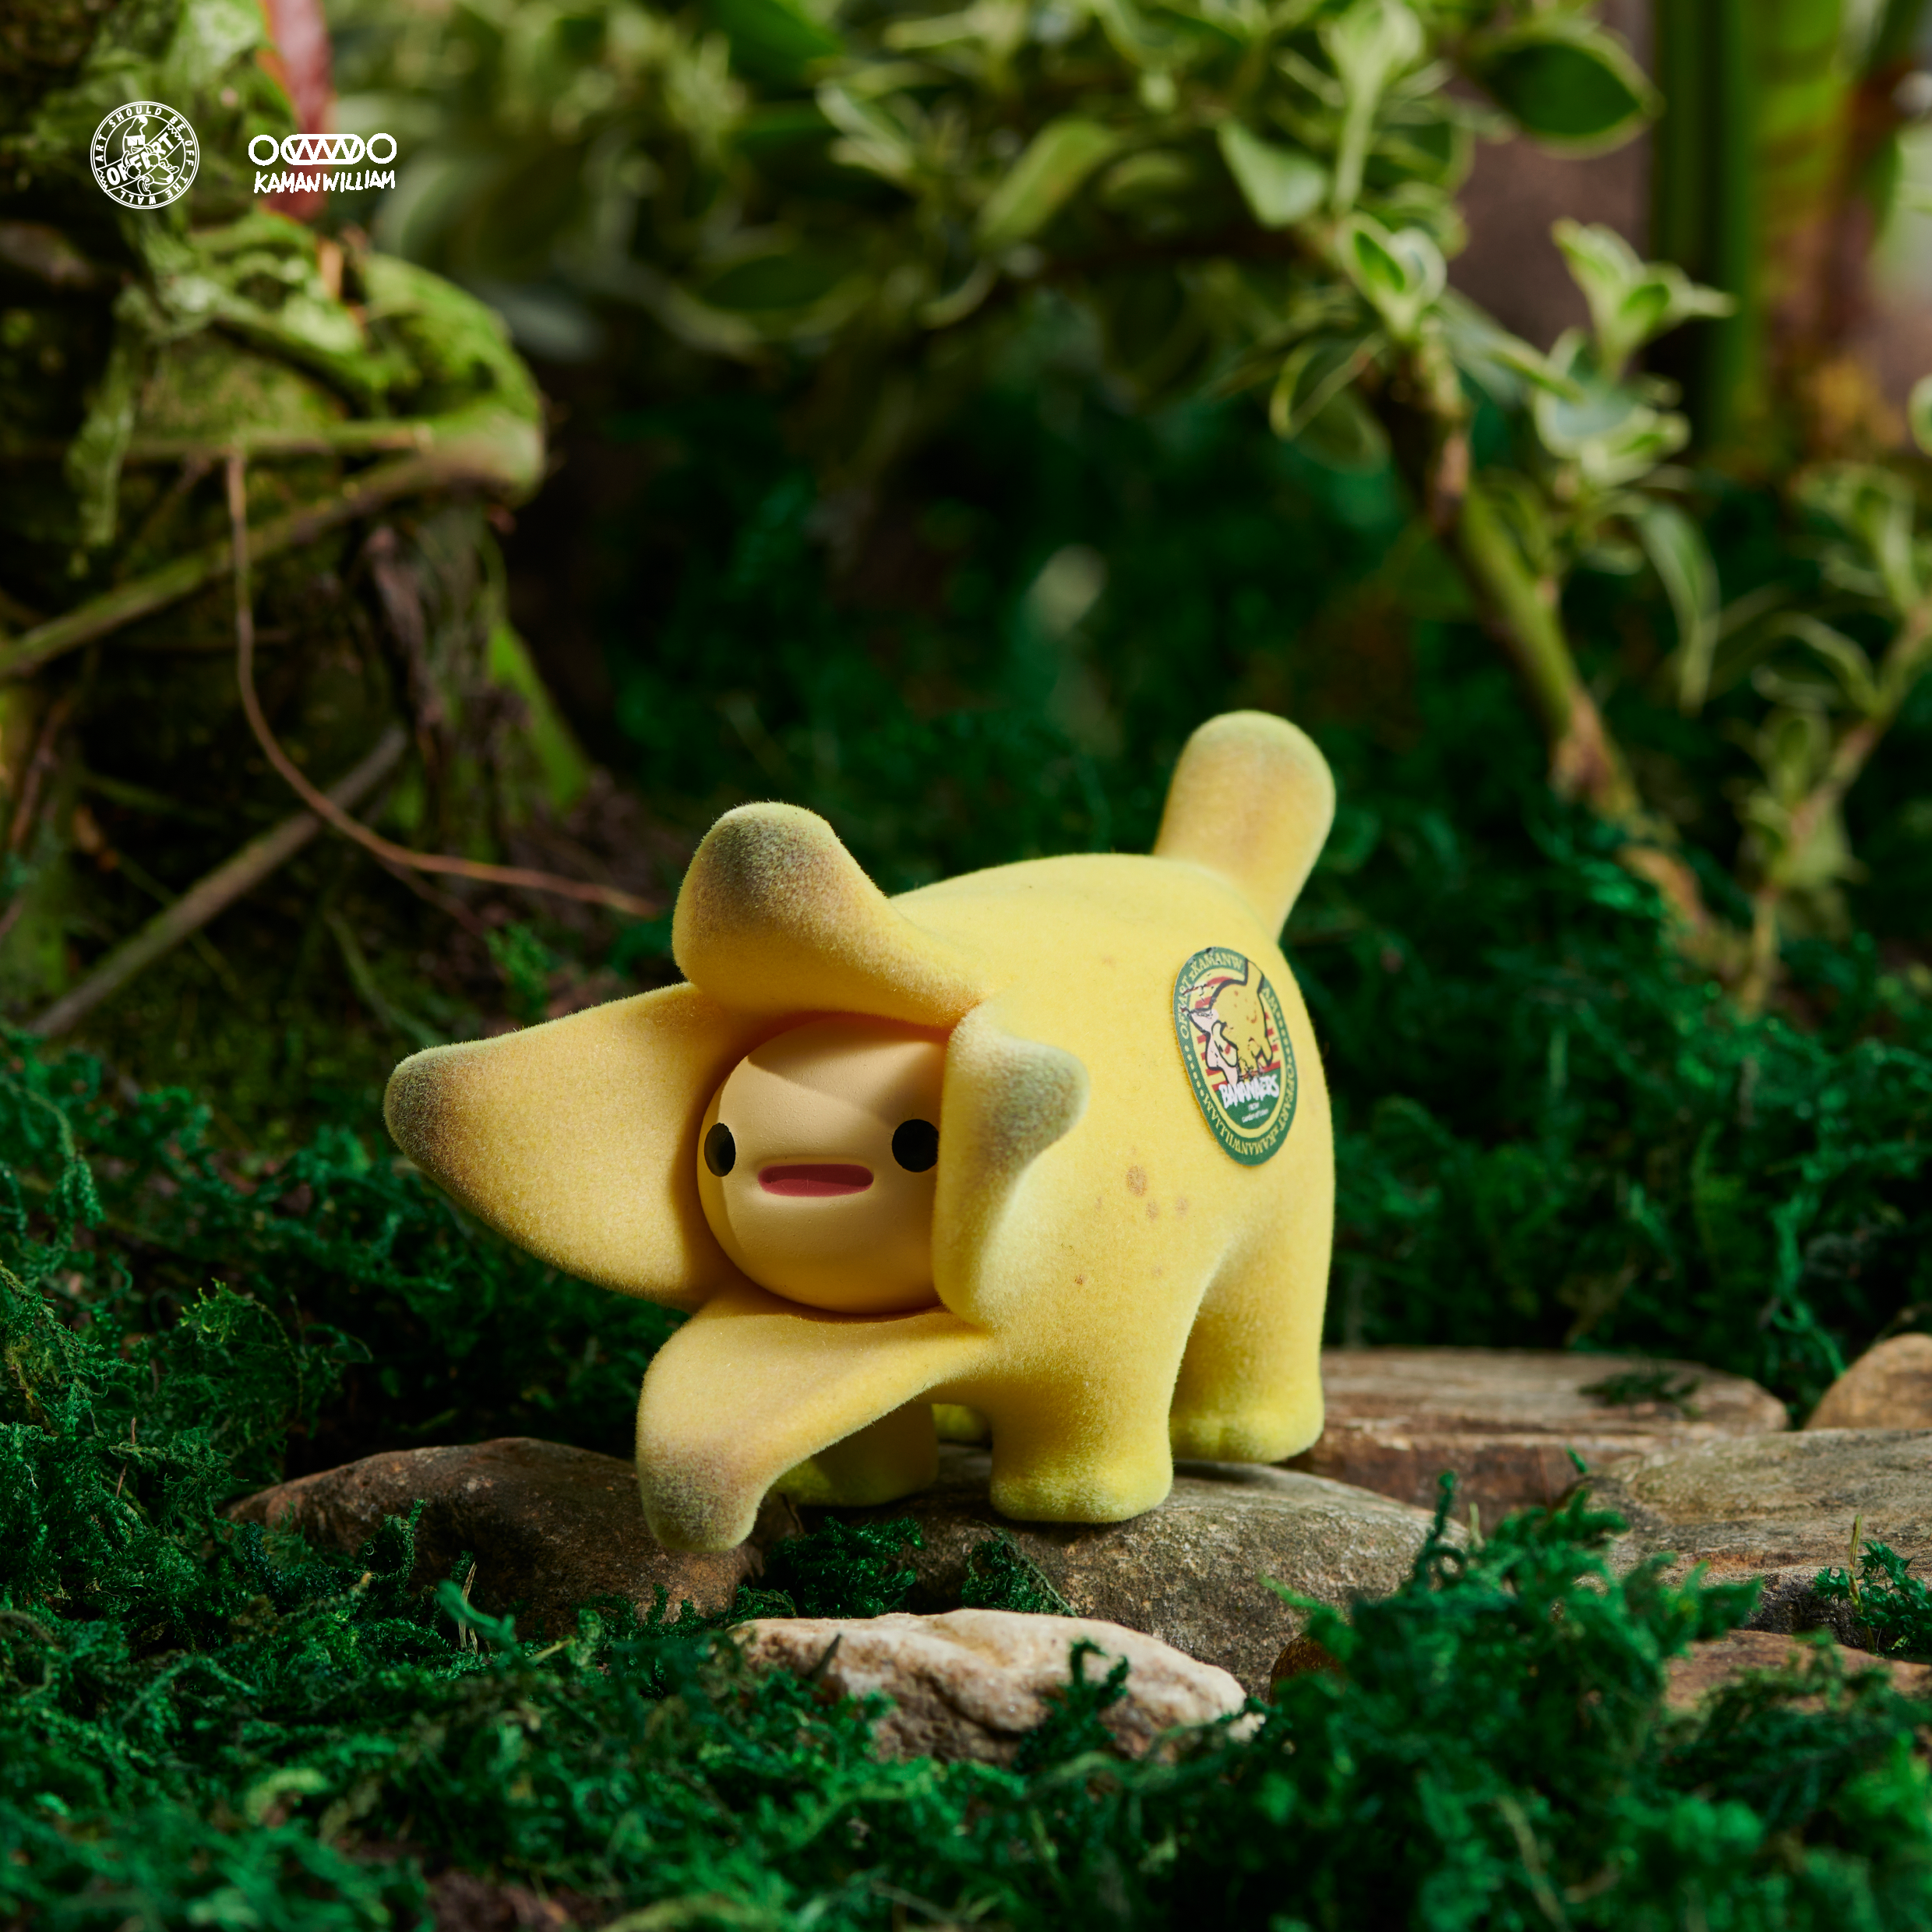 OFFART X Kamanwillam Bananaer Dog Mini - Eden Garden 5.0 Flocked Edition - Preorder